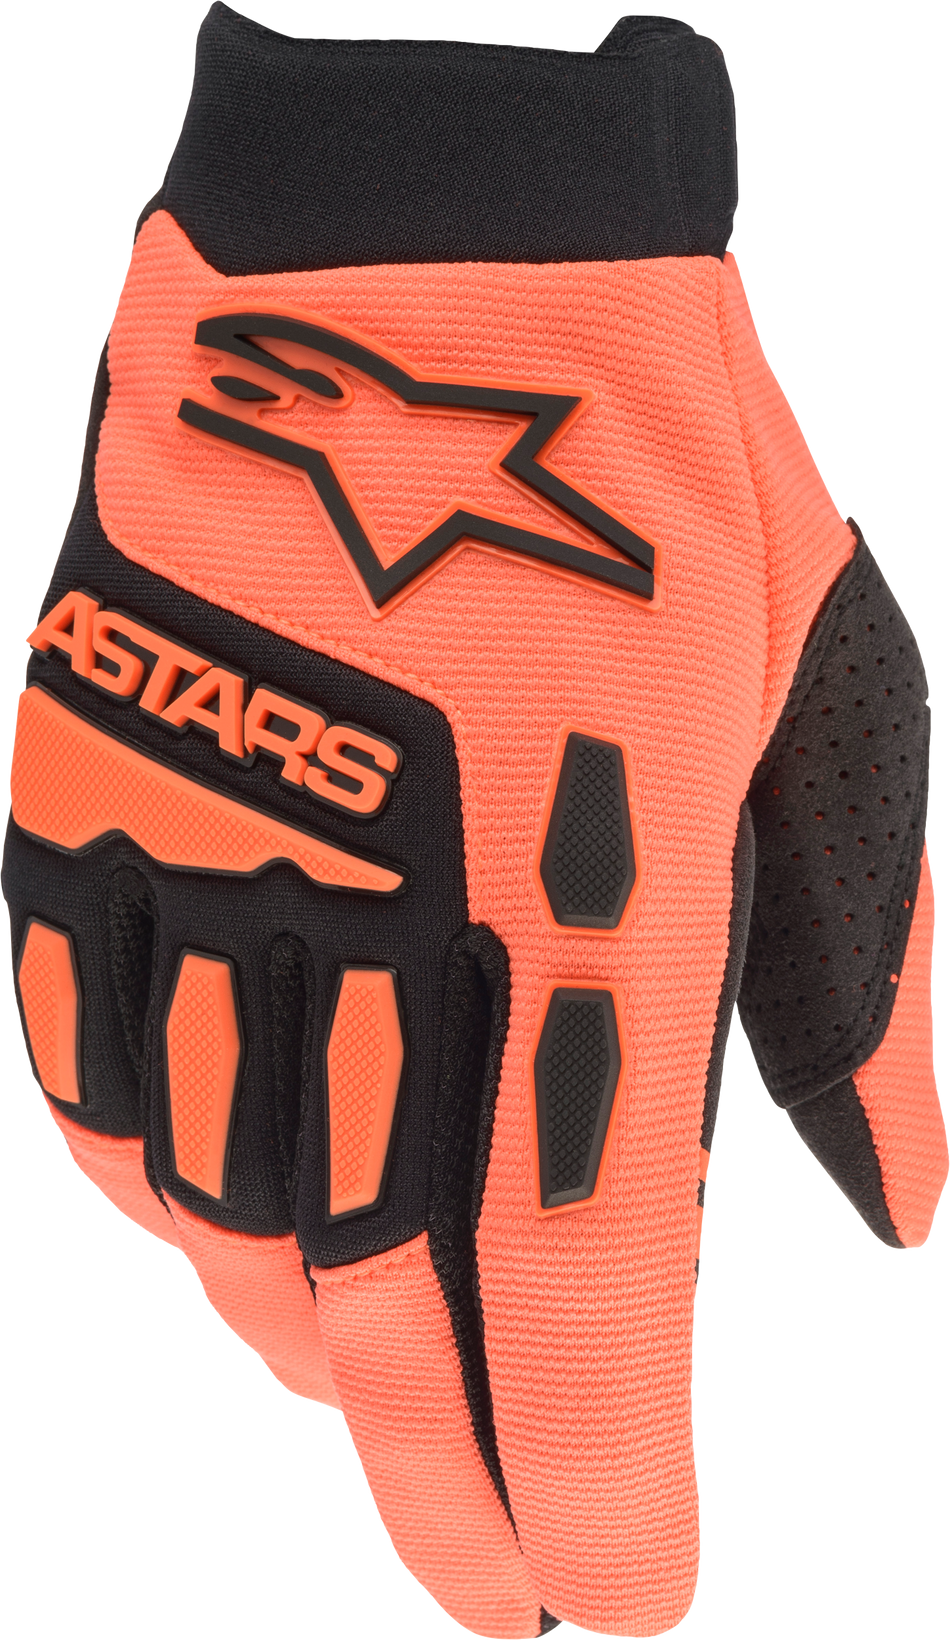 ALPINESTARS Full Bore Gloves Orange/Black Lg 3563622-41-L